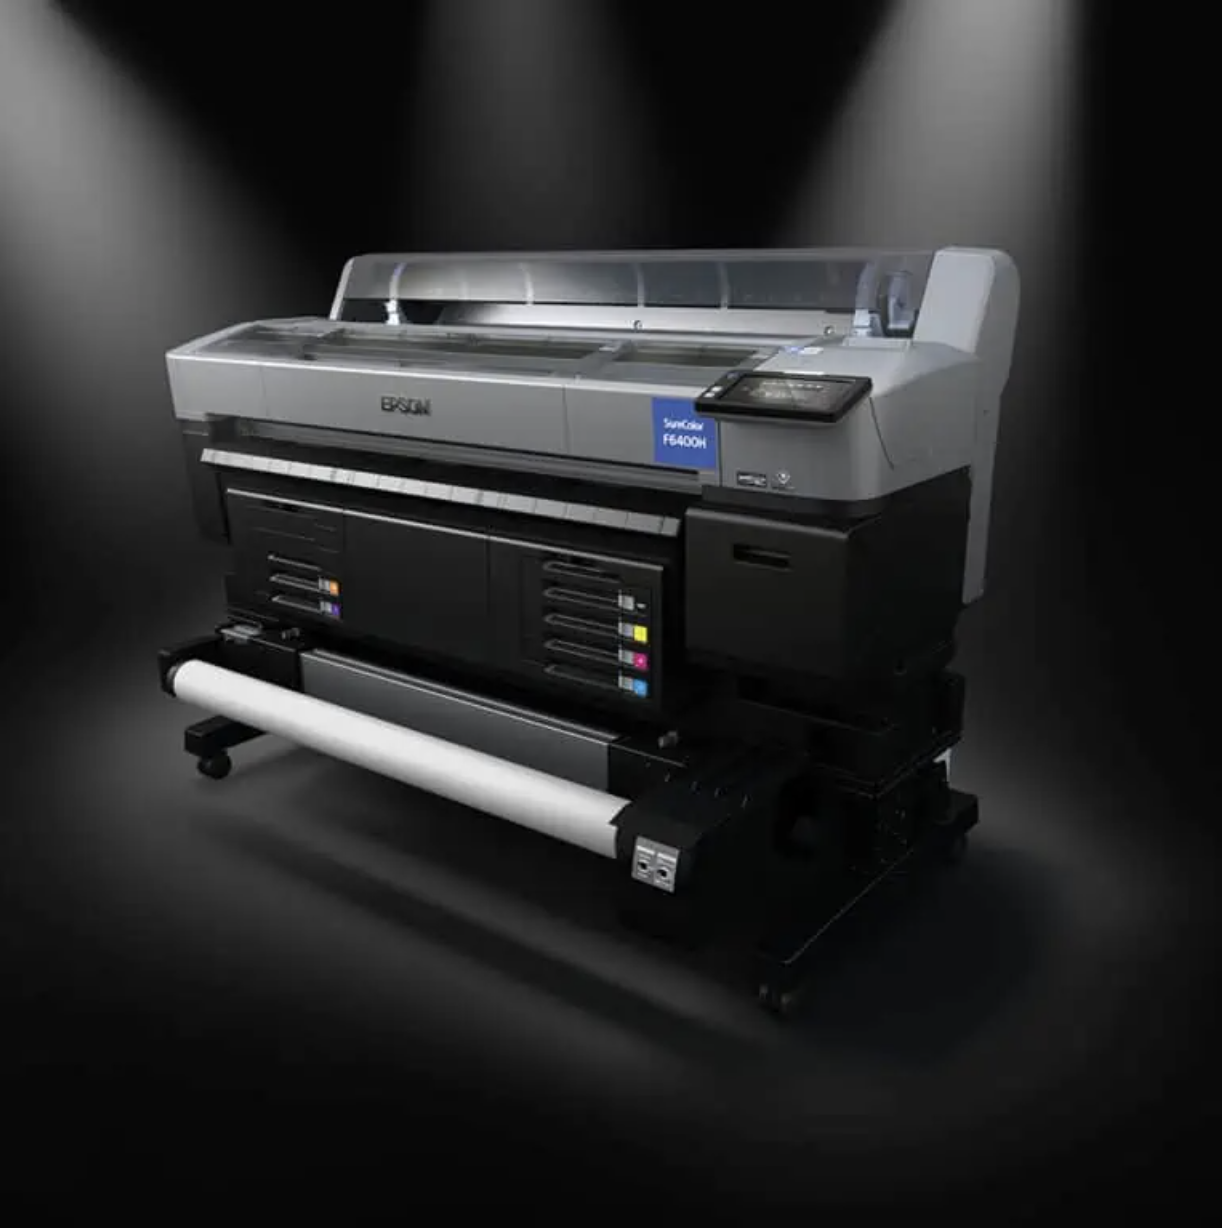 Epson מכריזה על שתי מדפסות סובלימציה חדשות מסדרת SureColor להדפסה על טקסטיל